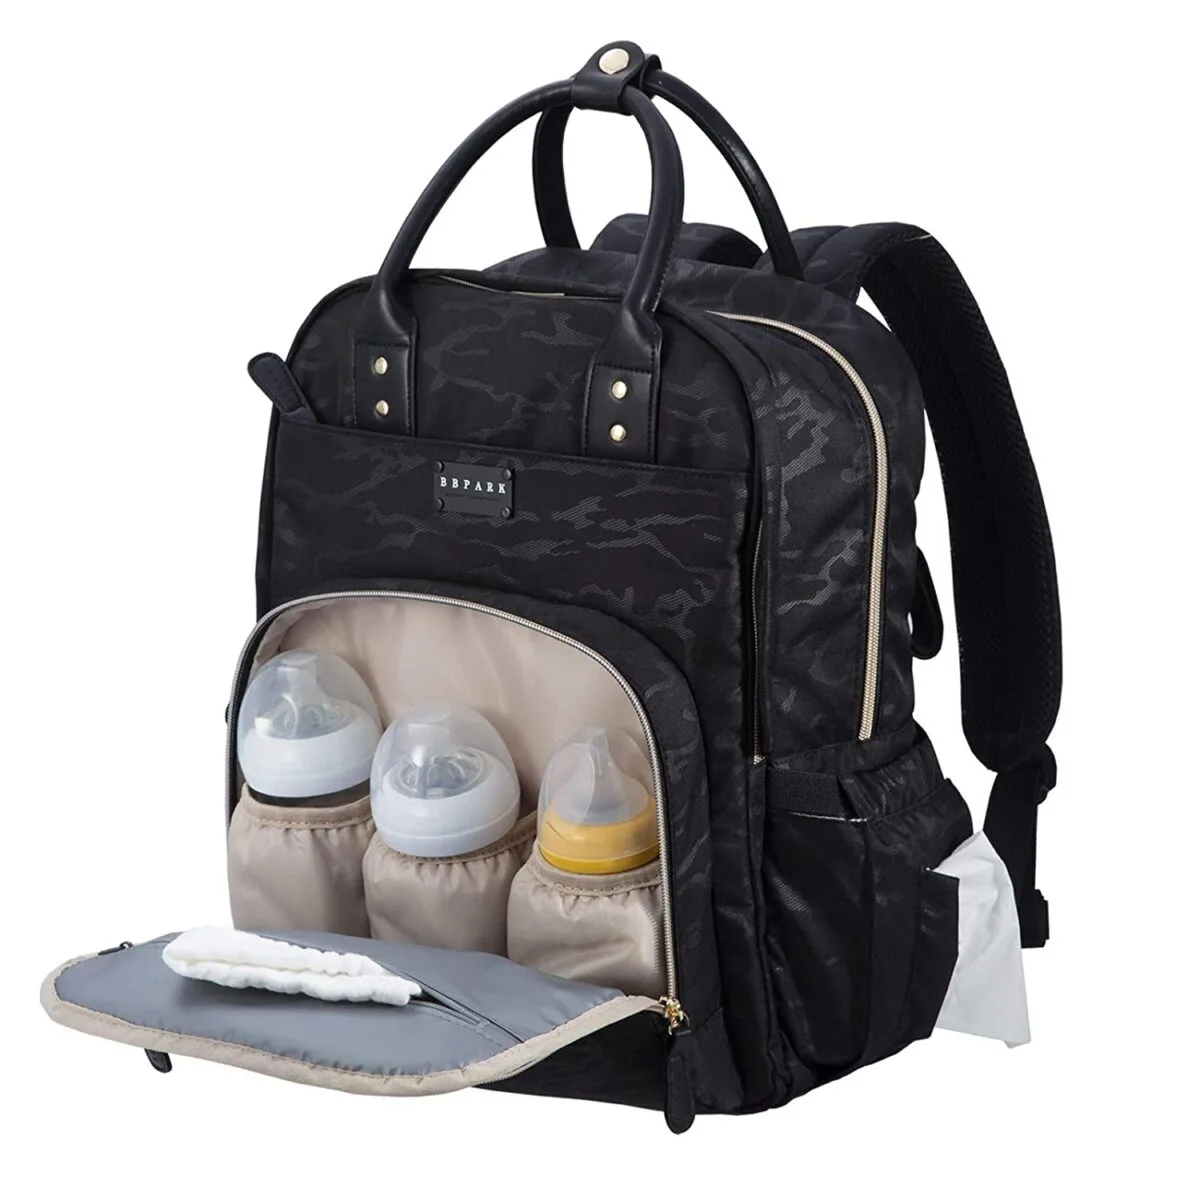 BBPARK Camo Diaper Bag Backpack